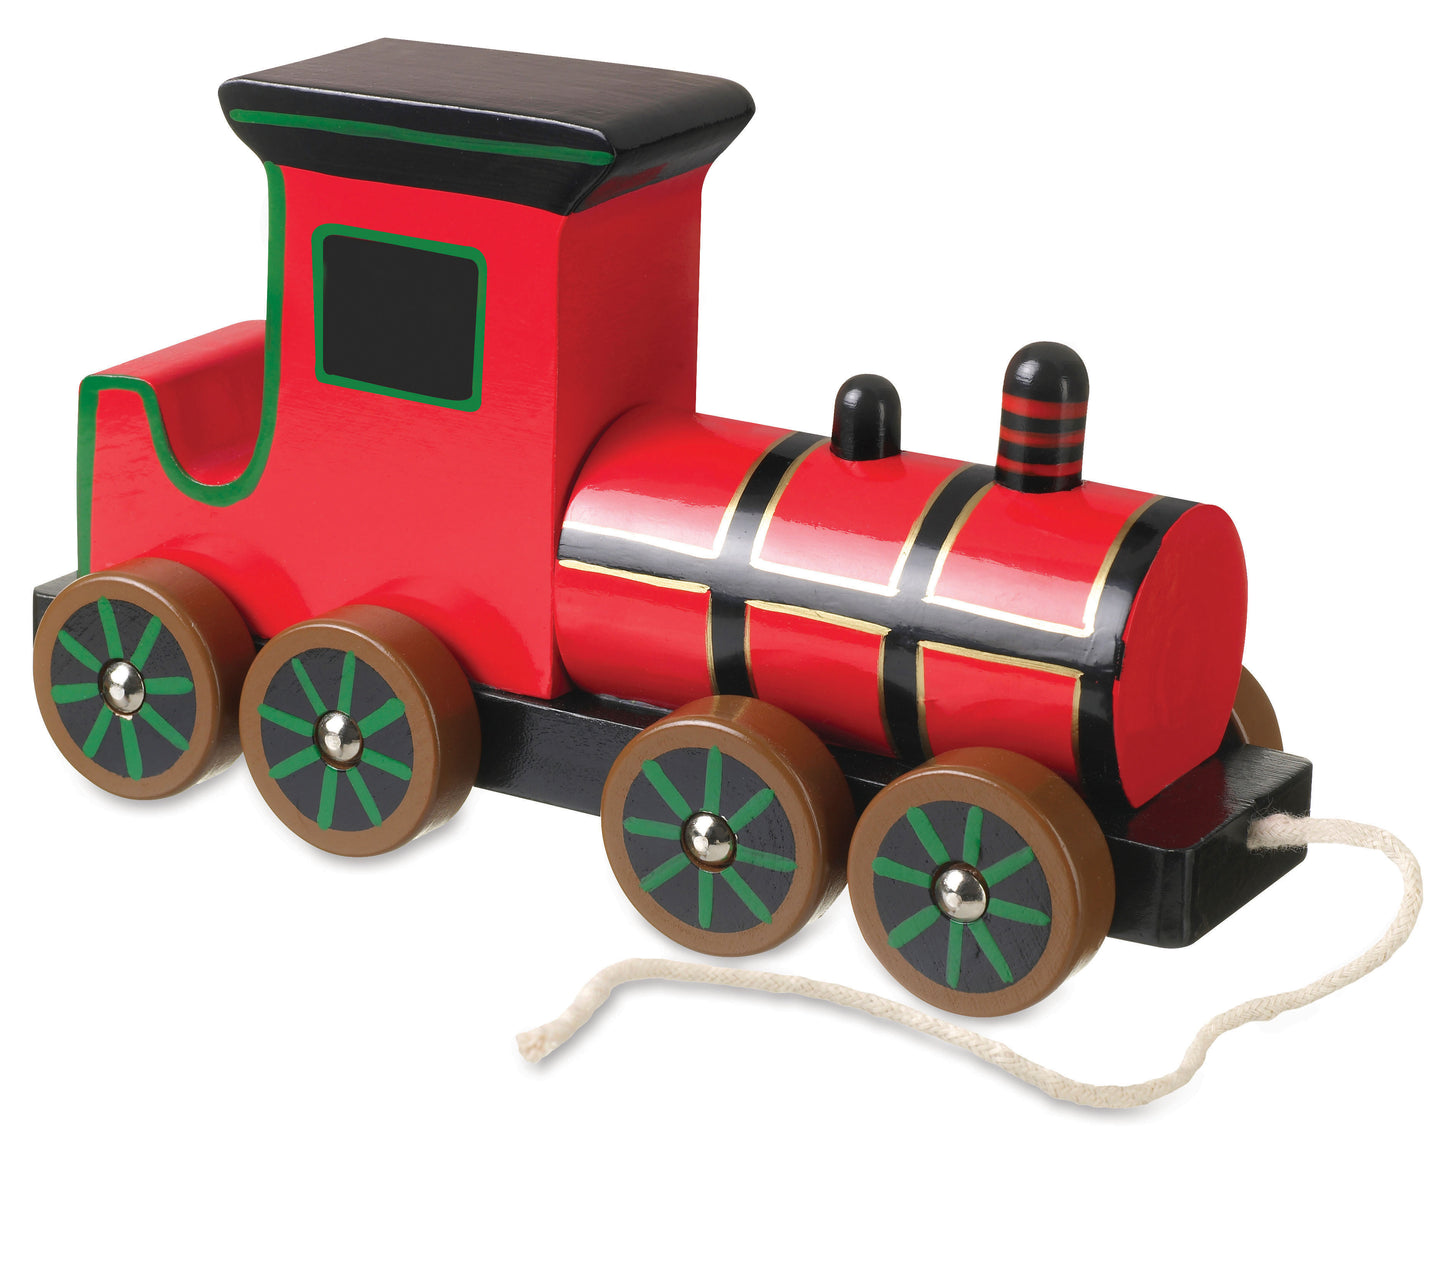 Orange Tree Toys Steam Train Pull Along